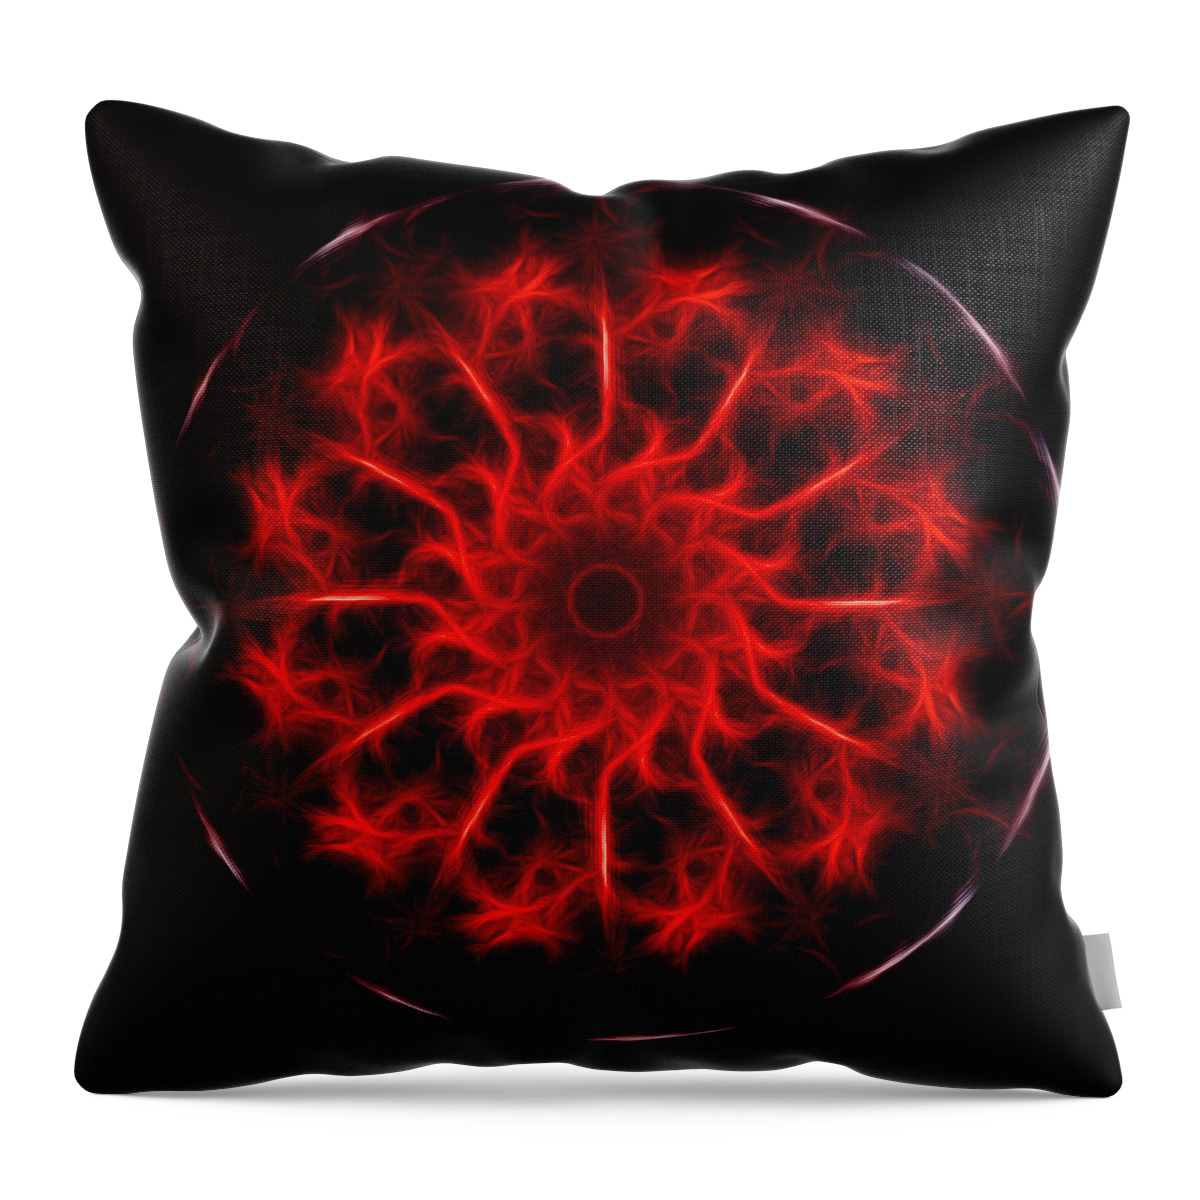 Mandala Throw Pillow featuring the photograph Red Fire Mandala/Kaleidoscope by Beth Venner